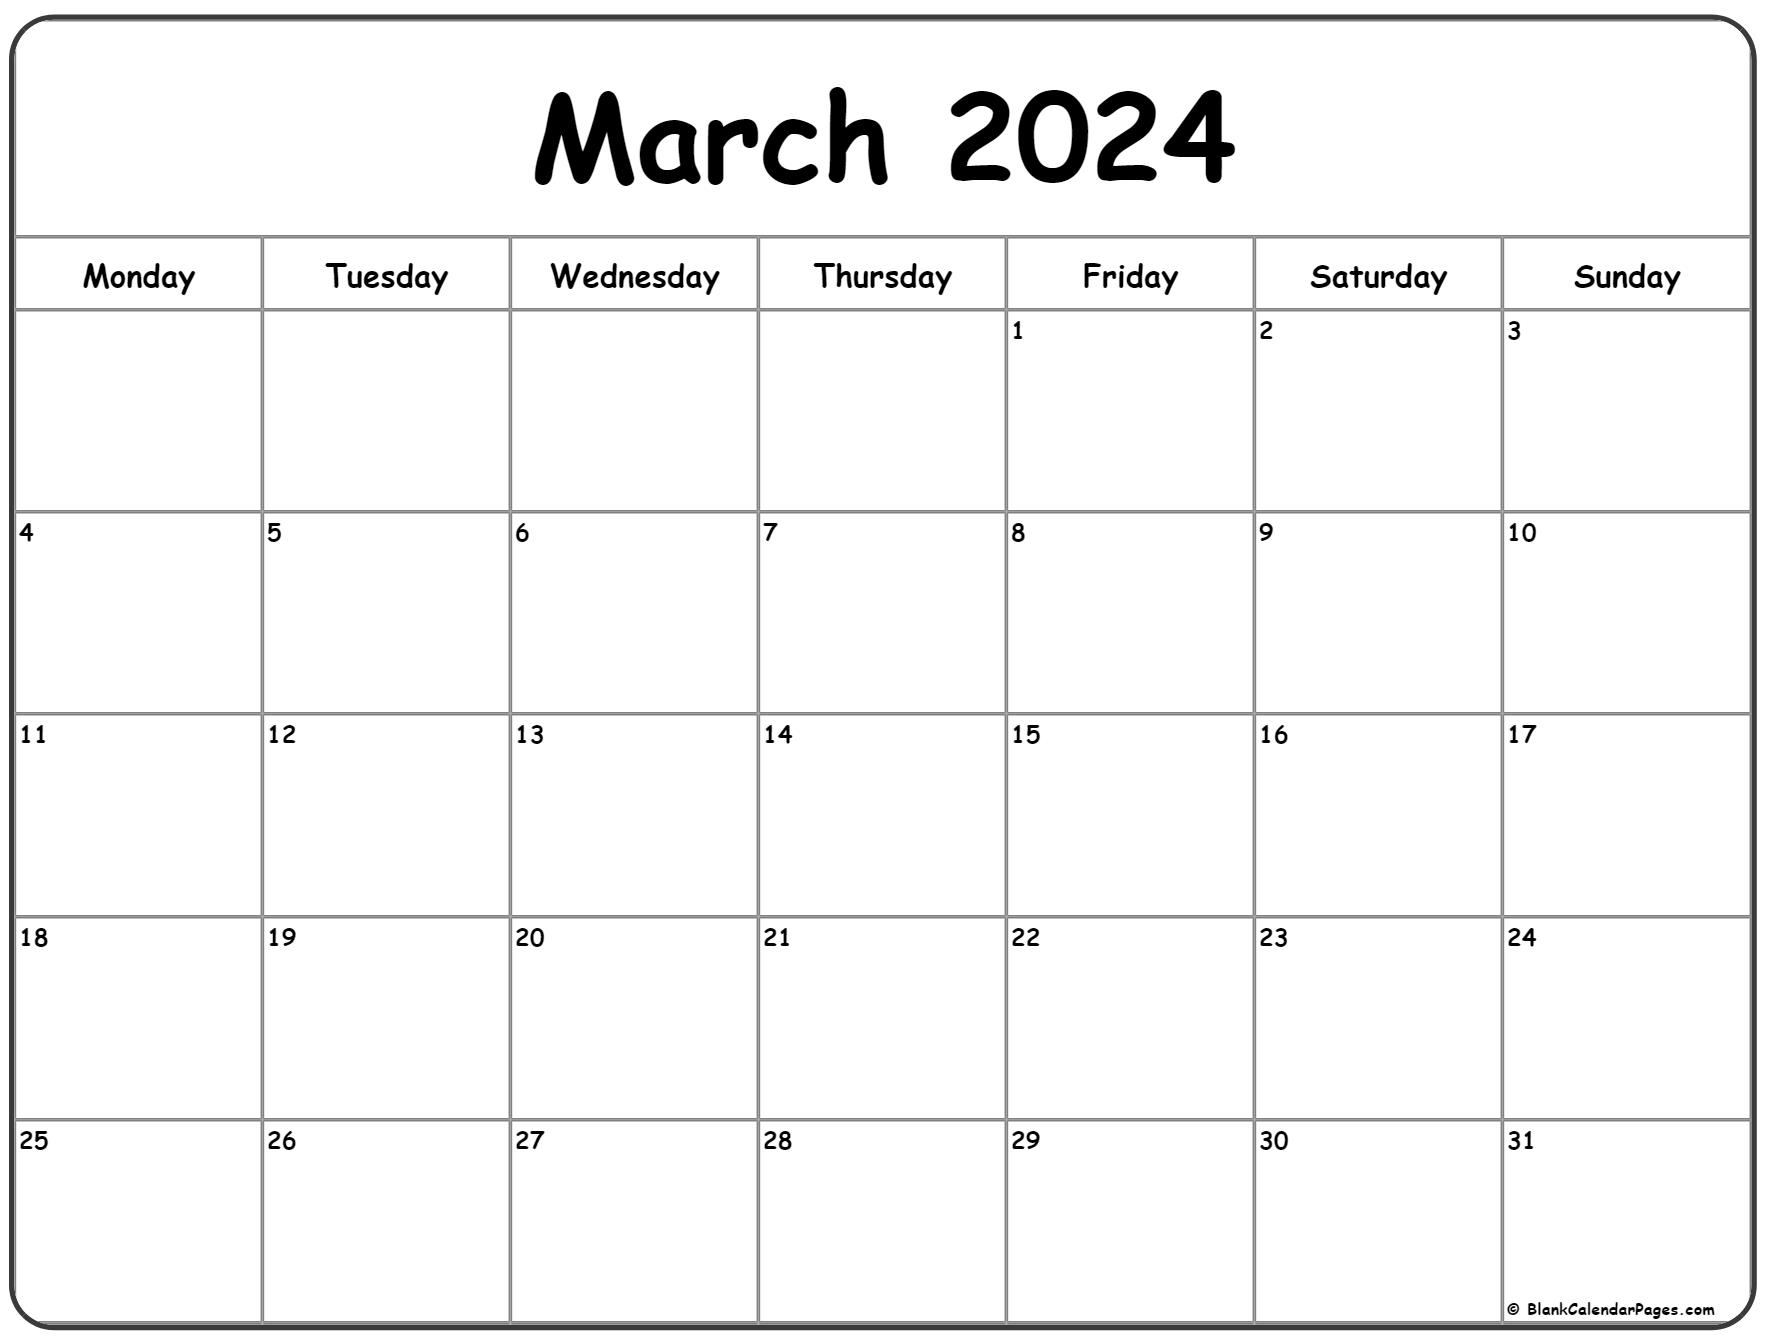 March 2024 Monday Calendar | Monday To Sunday for March Printable 2024 Calendar